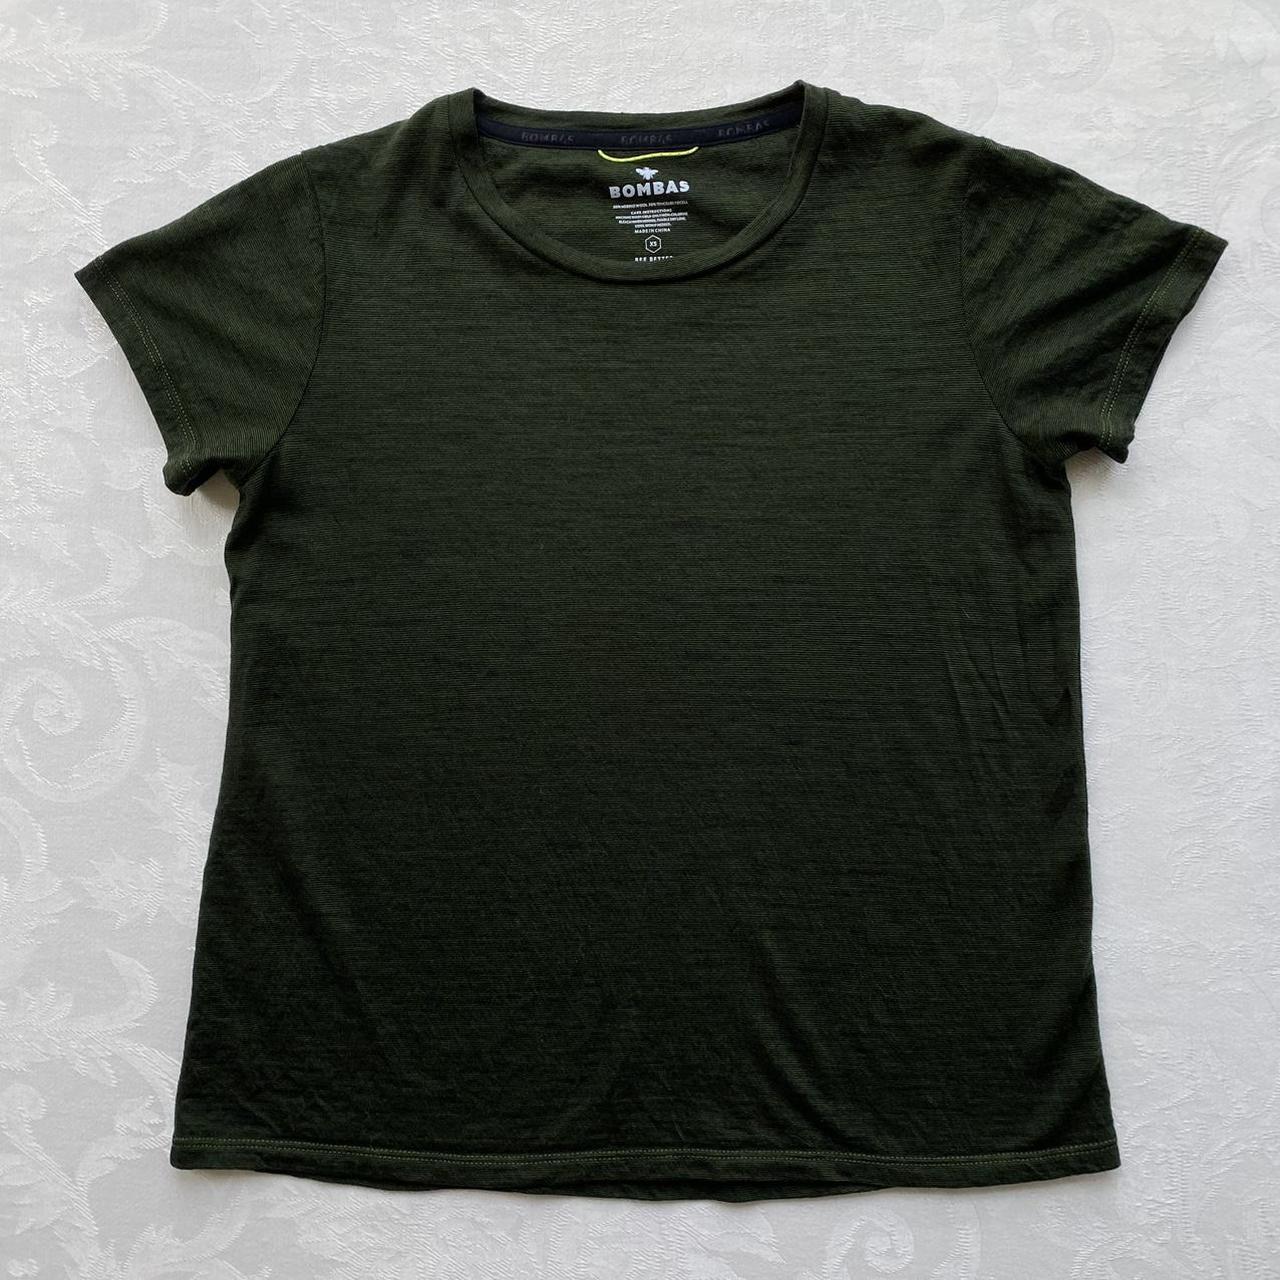 Bombas Women's Green Shirt